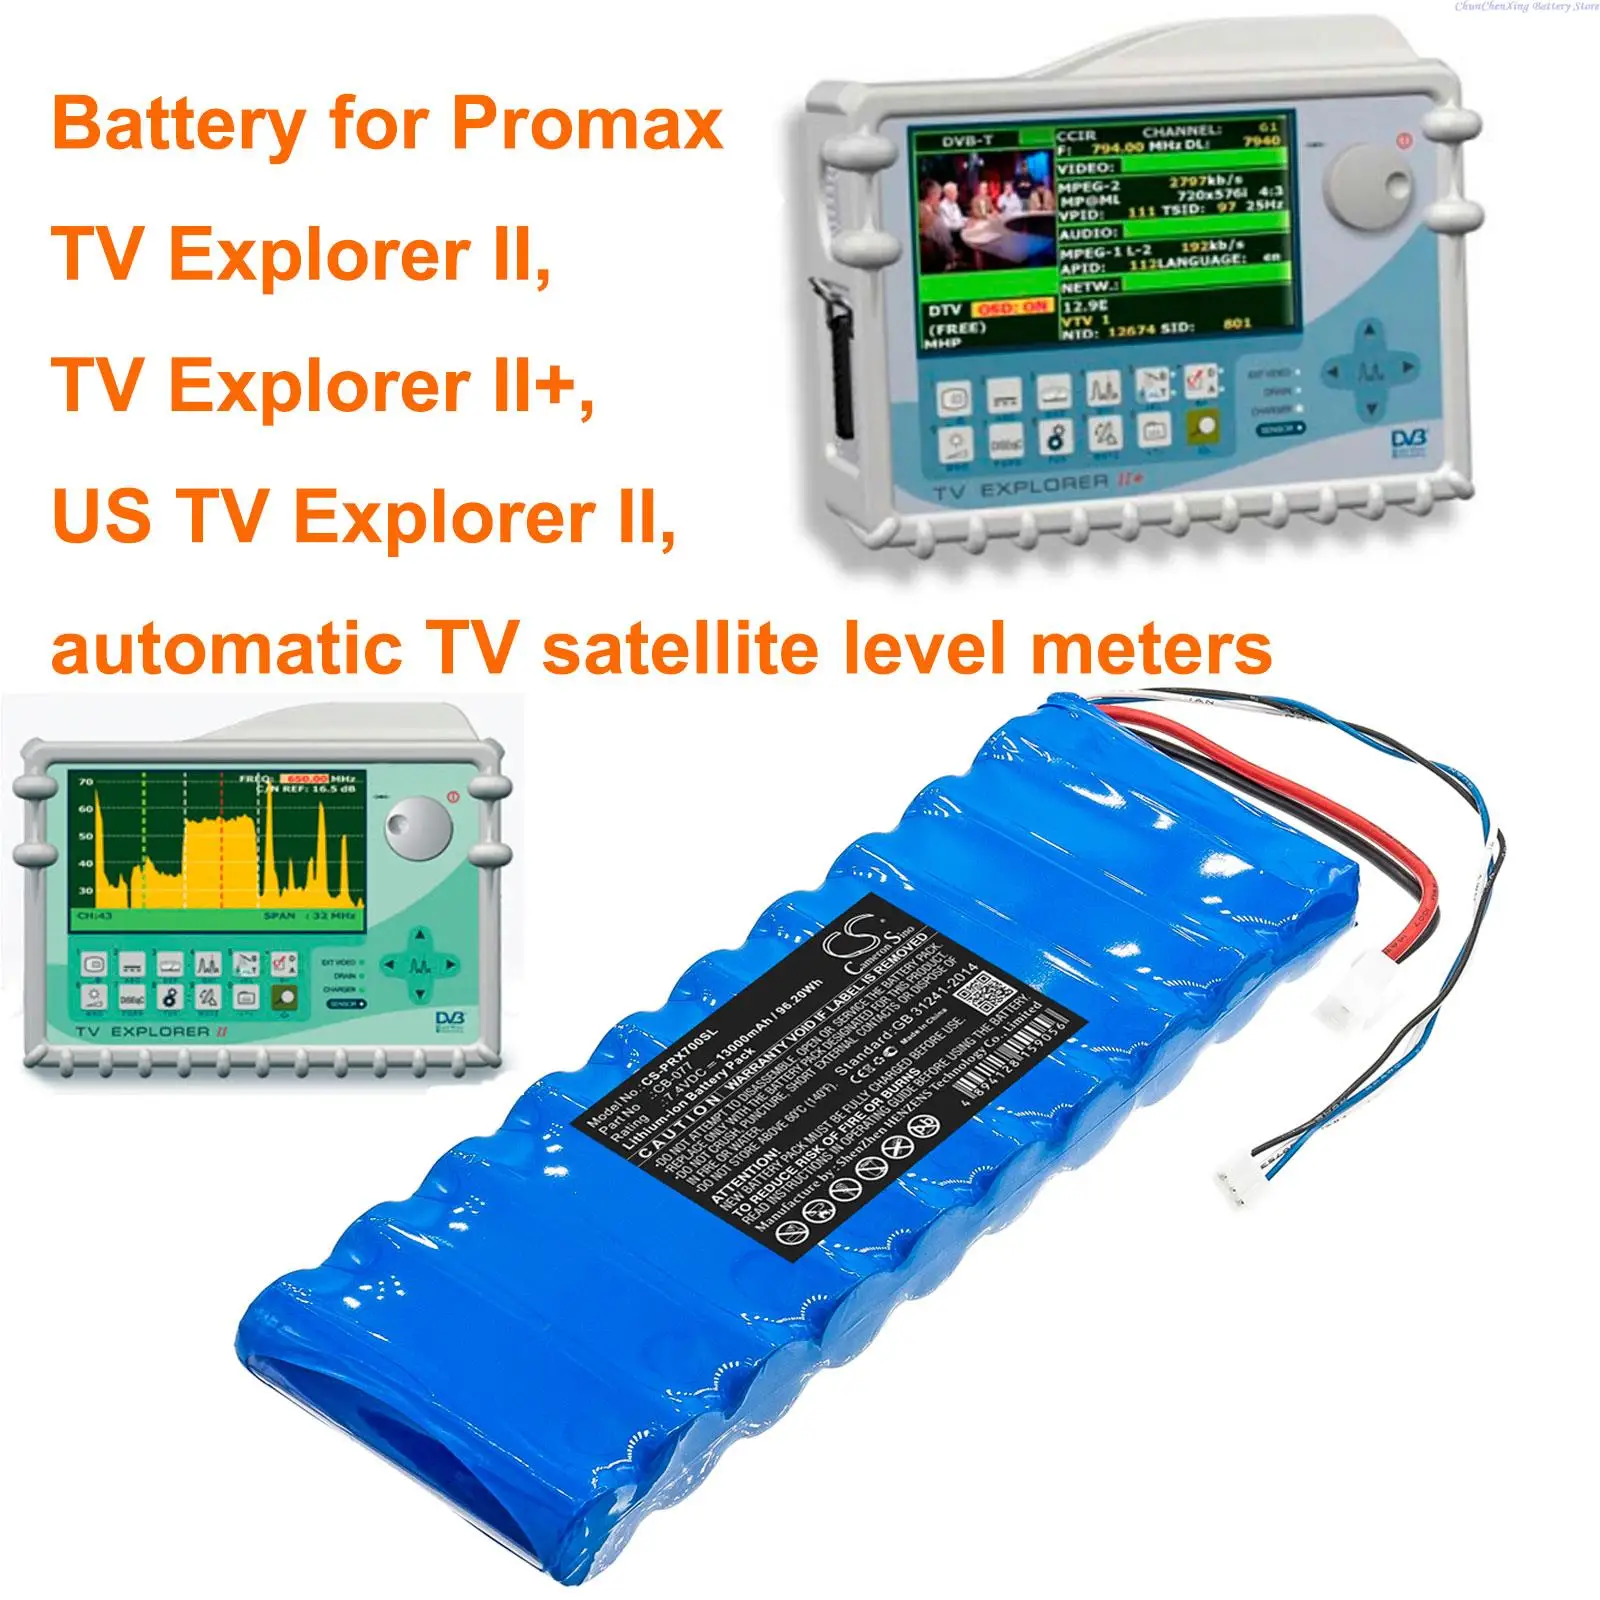 

GreenBattery 13000mAh Battery for Promax TV Explorer II, TV Explorer II+, US TV Explorer II, automatic TV satellite level meters